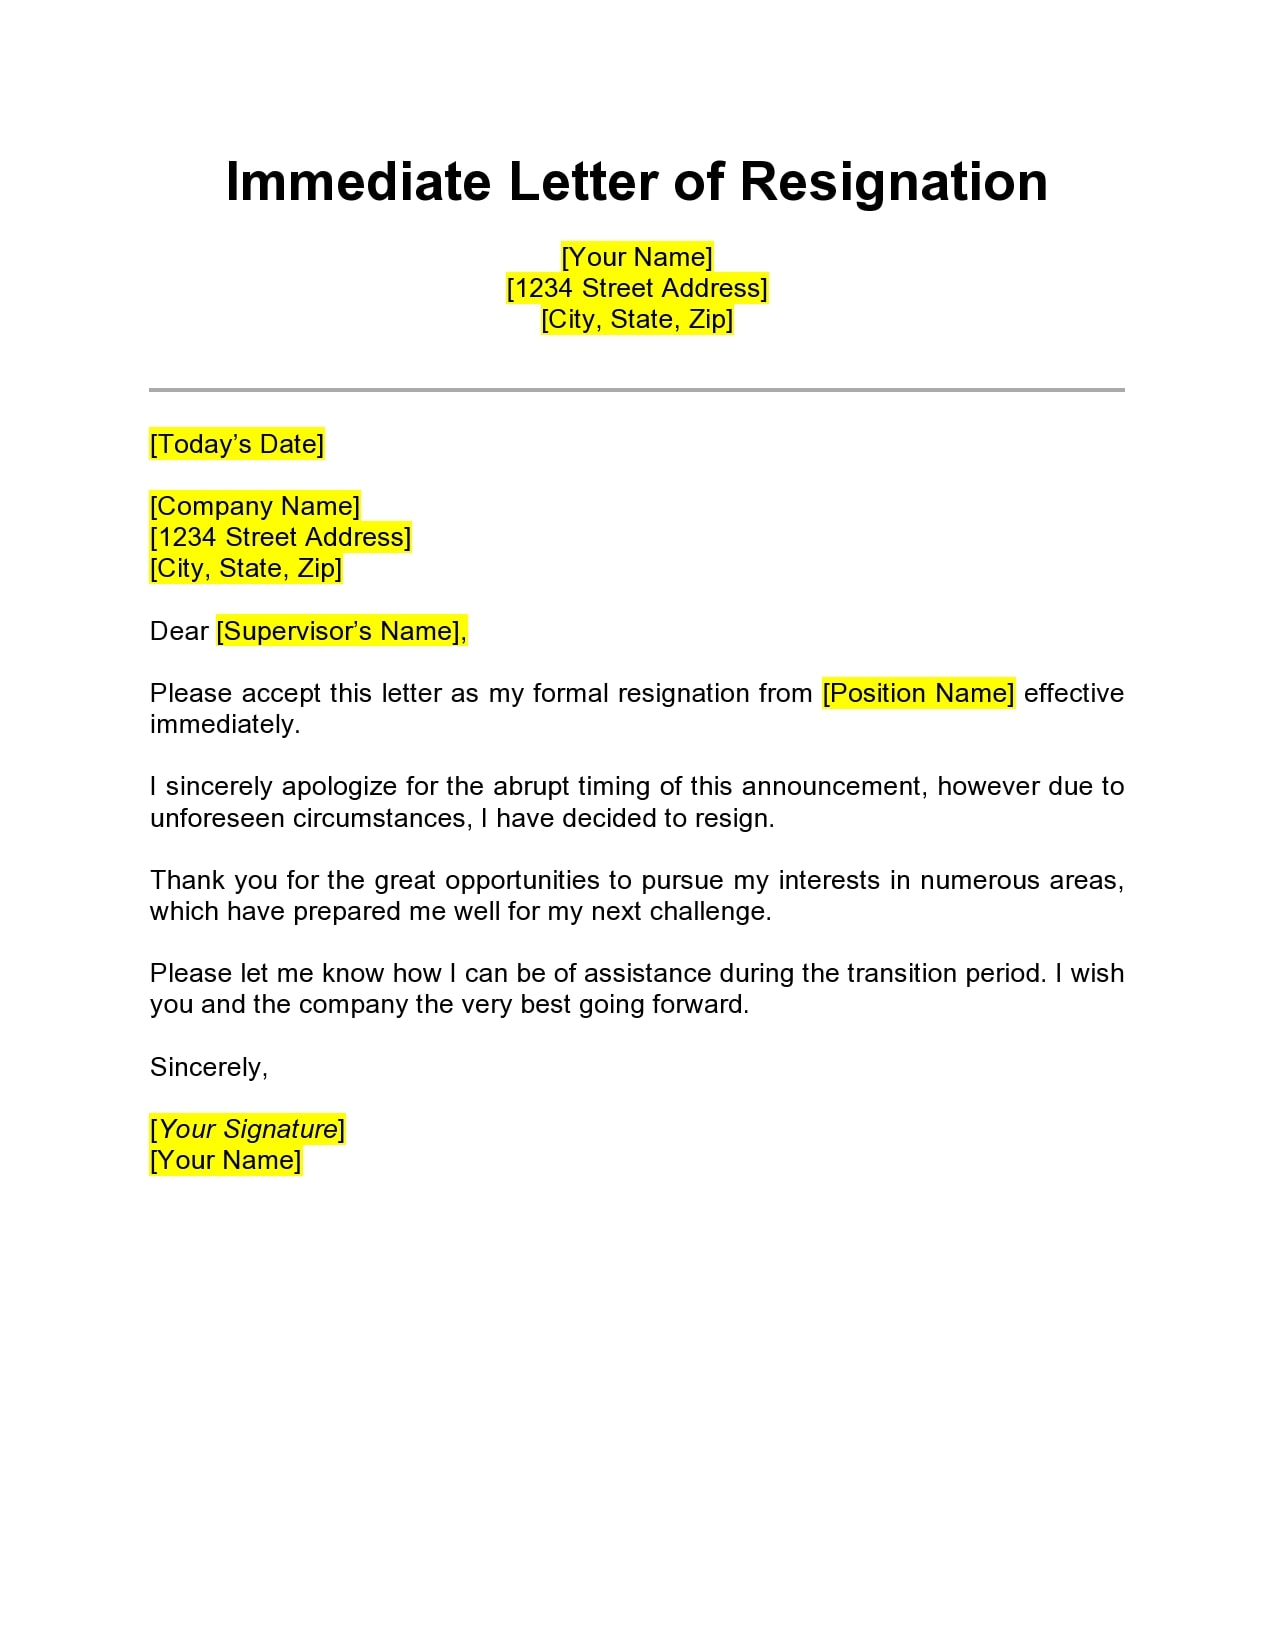 Immediate Resignation Letter Template Free